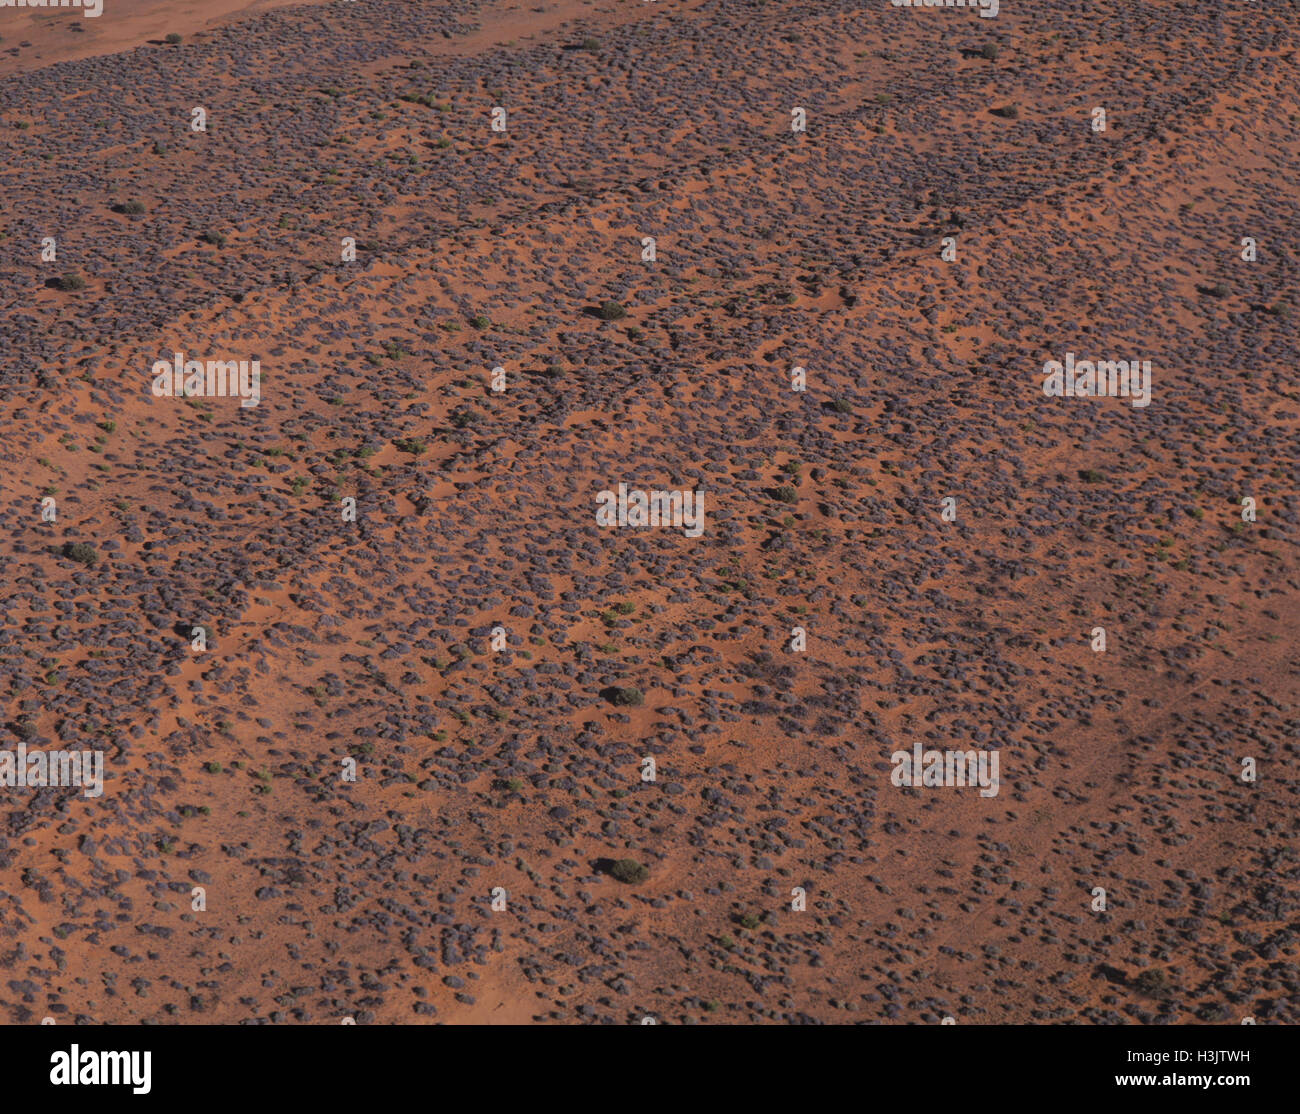 Dune fields, aerial photograph. Stock Photo